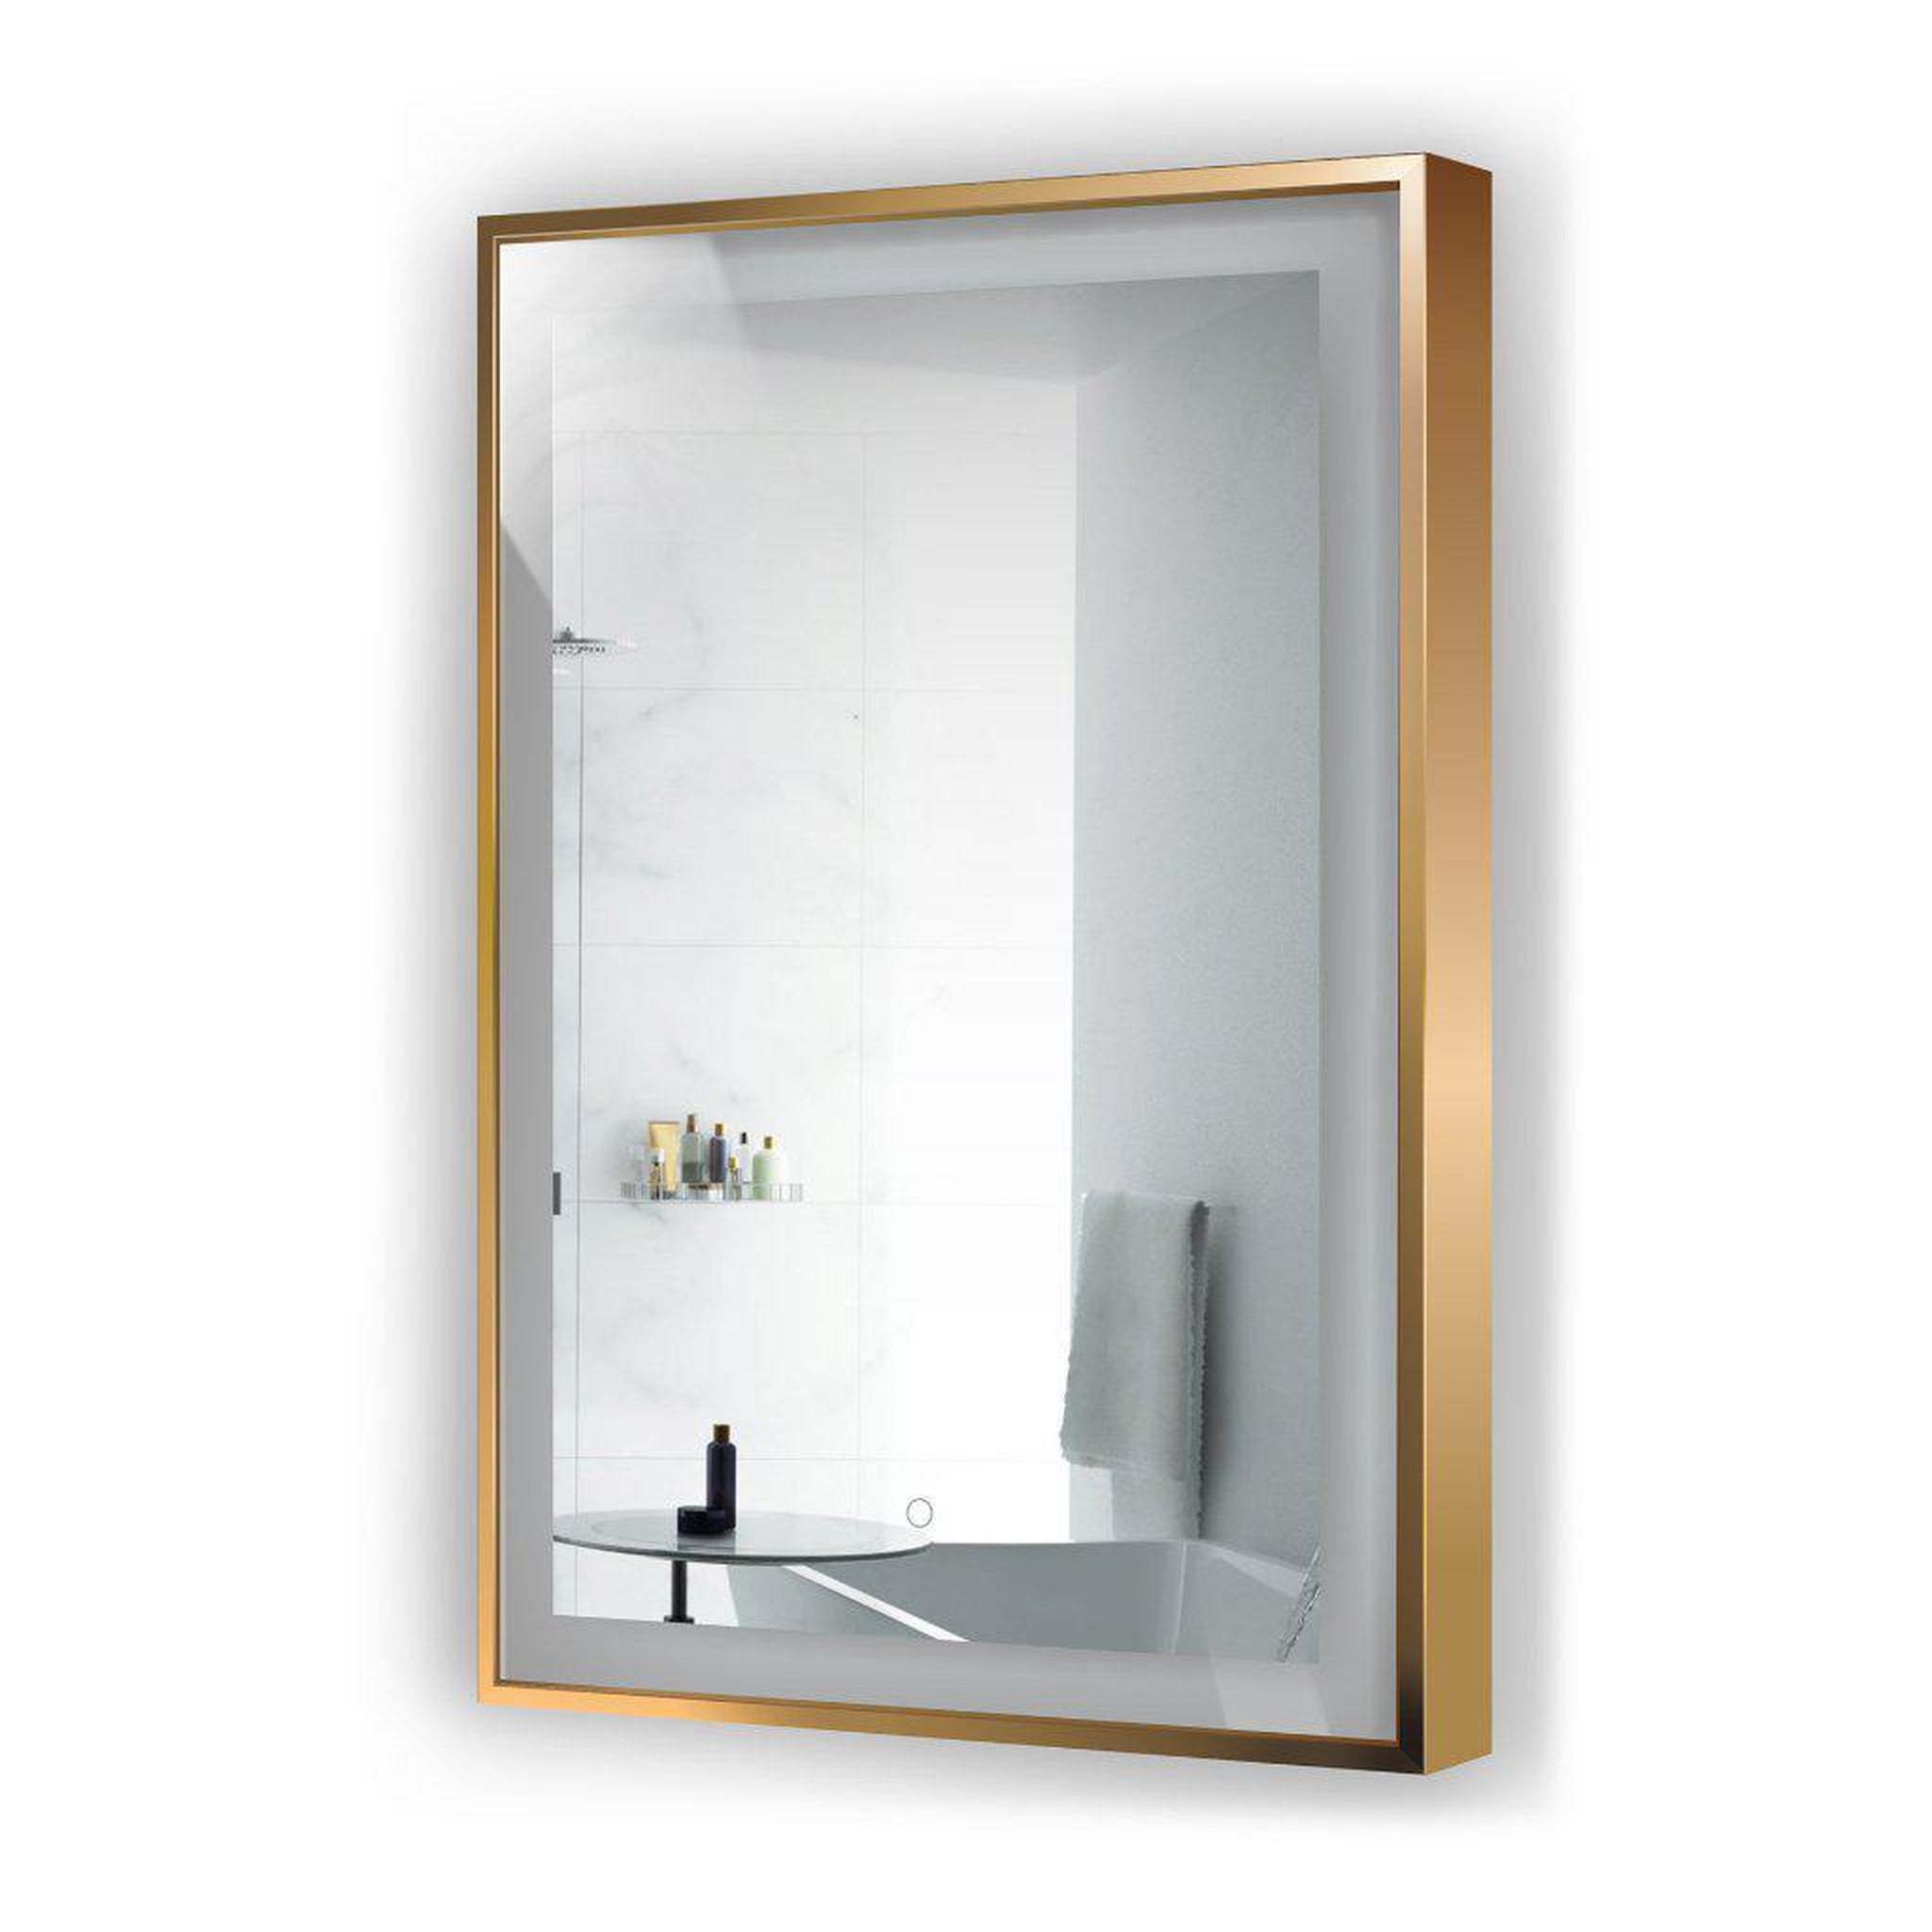 Krugg Reflections, Krugg Reflections Soho 24" x 36" 5000K Rectangular Matte Gold Wall-Mounted Framed LED Bathroom Vanity Mirror With Built-in Defogger and Dimmer